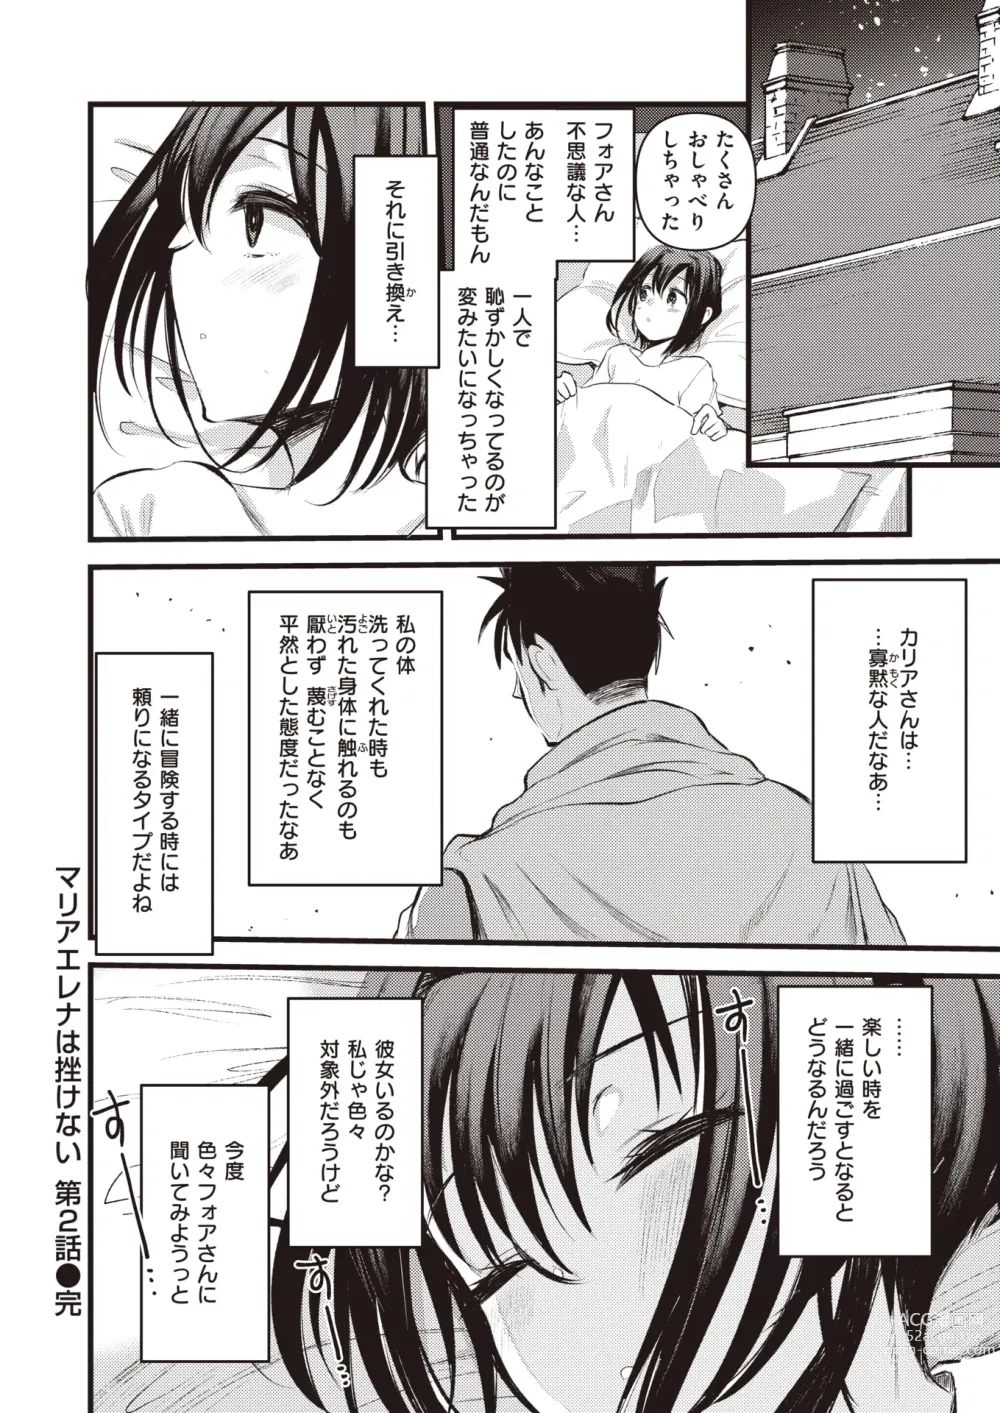 Page 67 of manga Isekai Rakuten Vol. 28